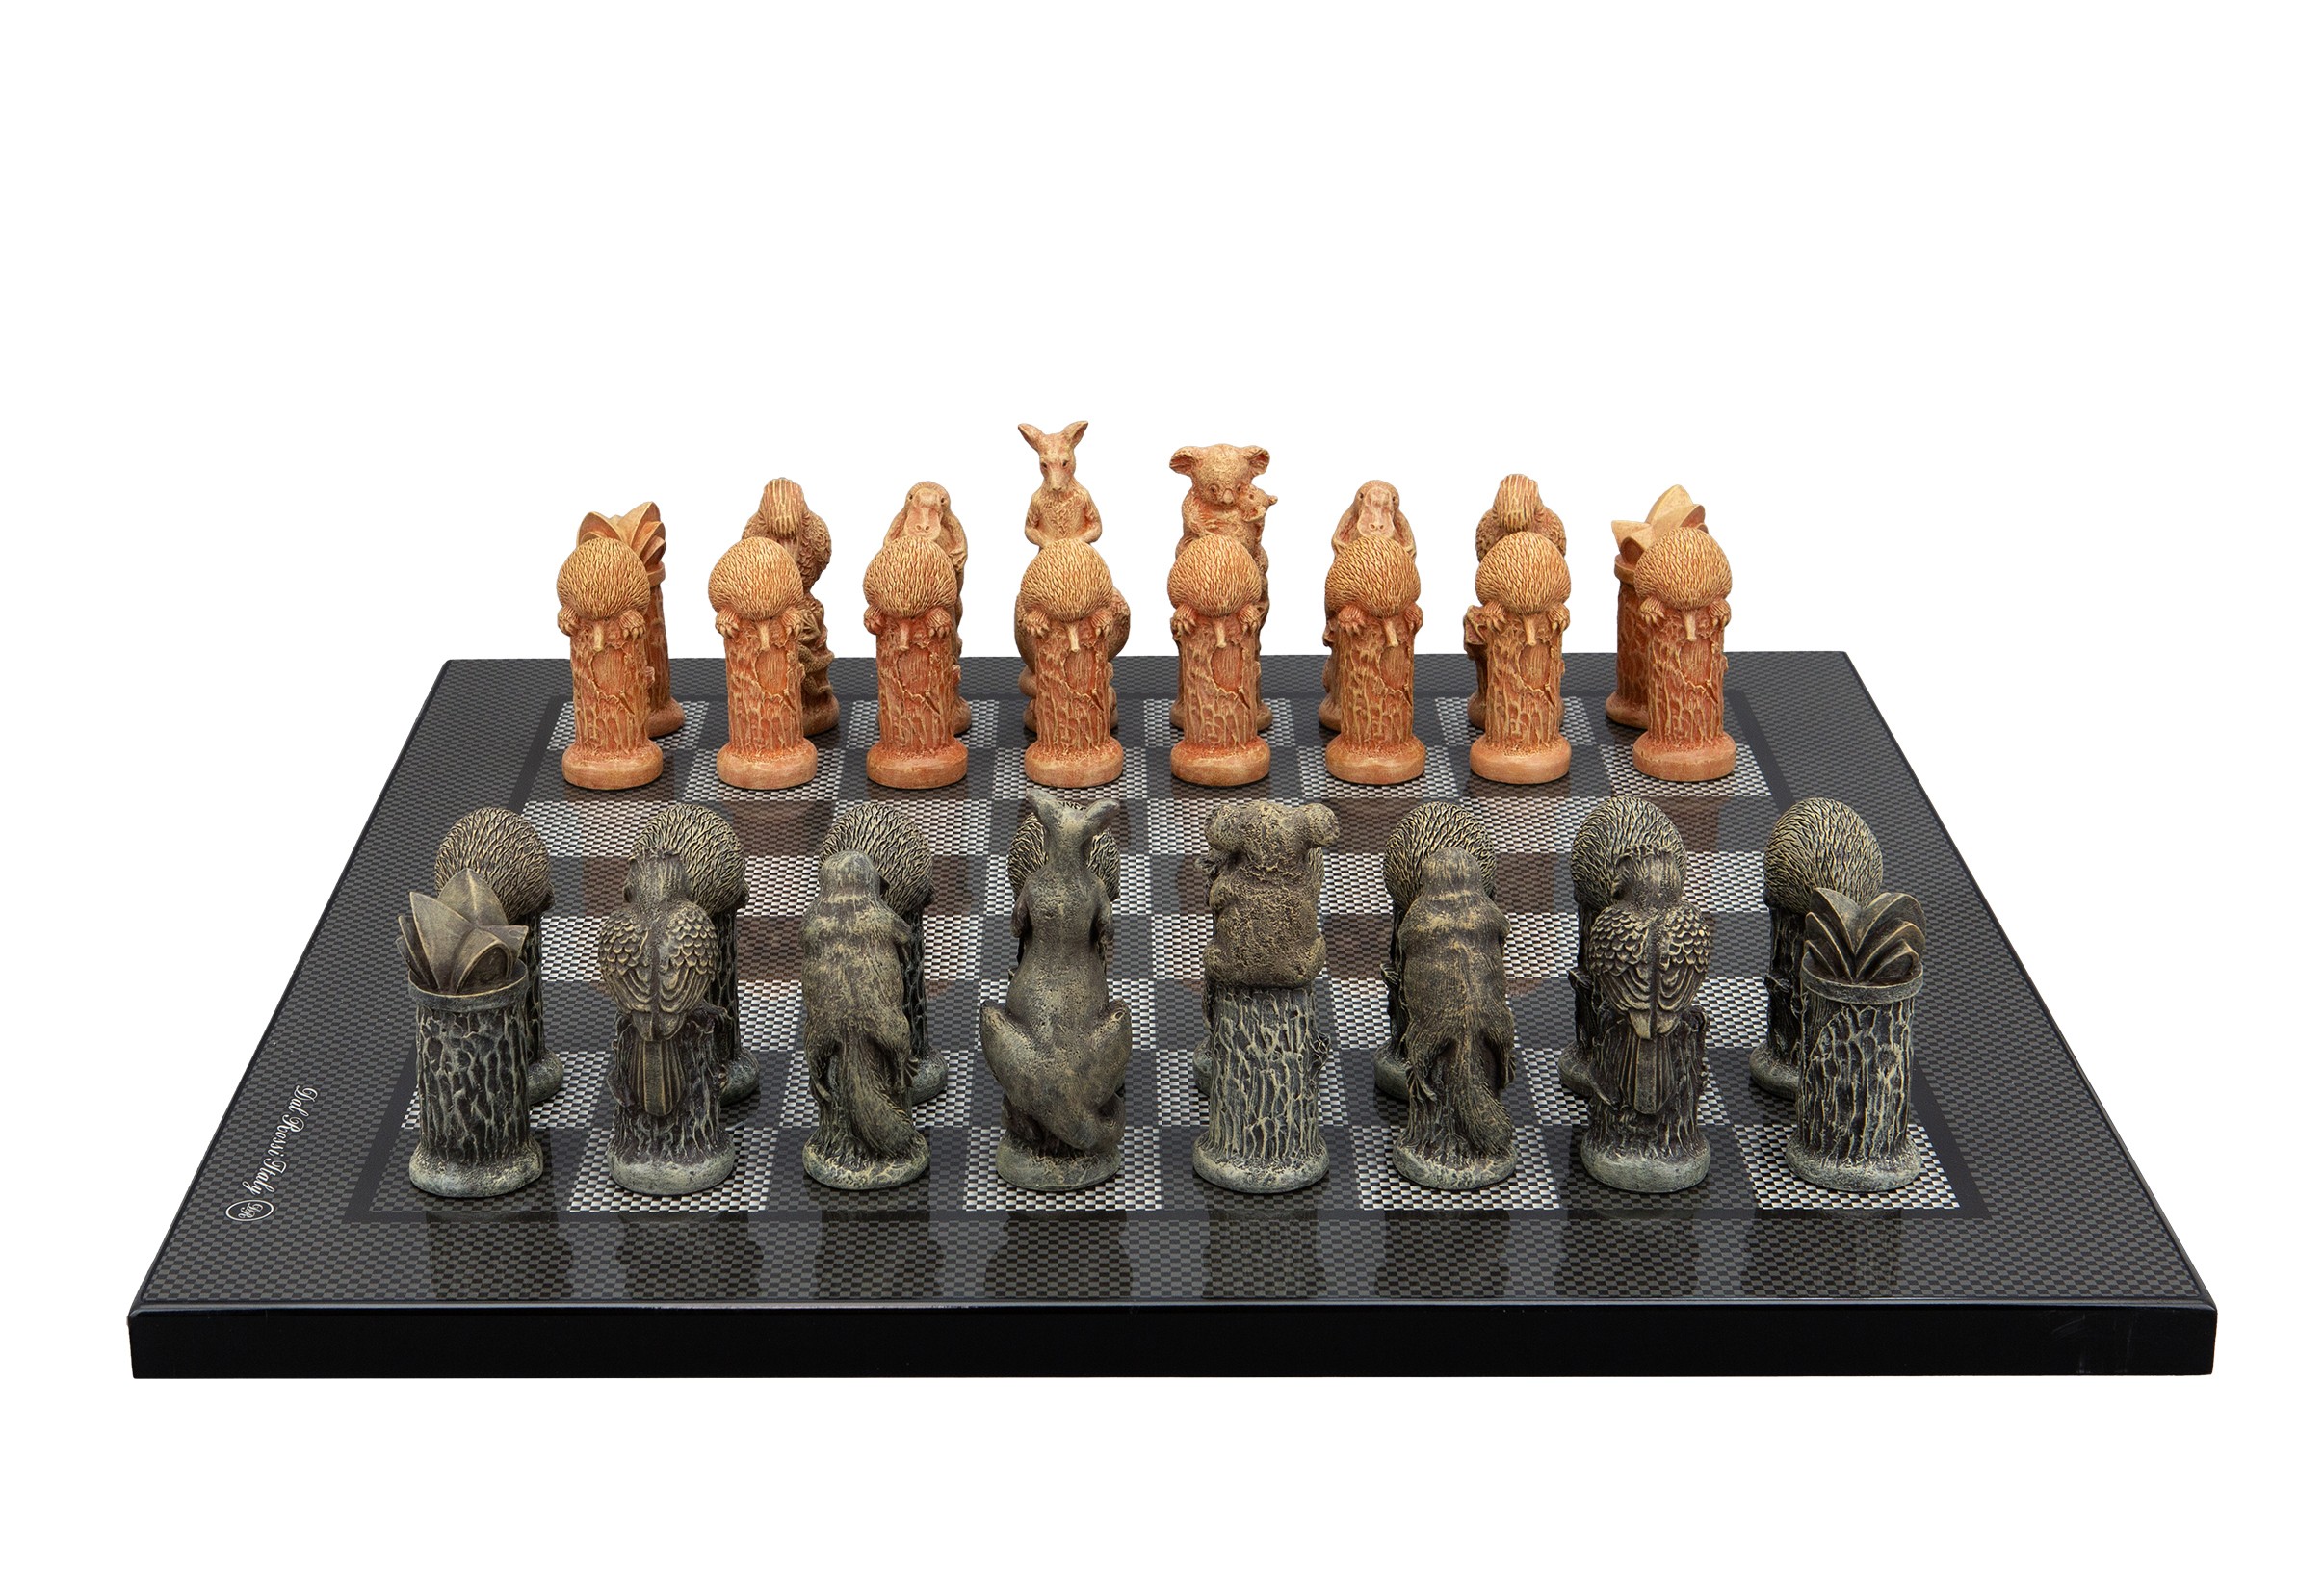 Dal Rossi Hand Paint - Australiana Chessmen on a Carbon Fibre Finish, 40cm Chess Board